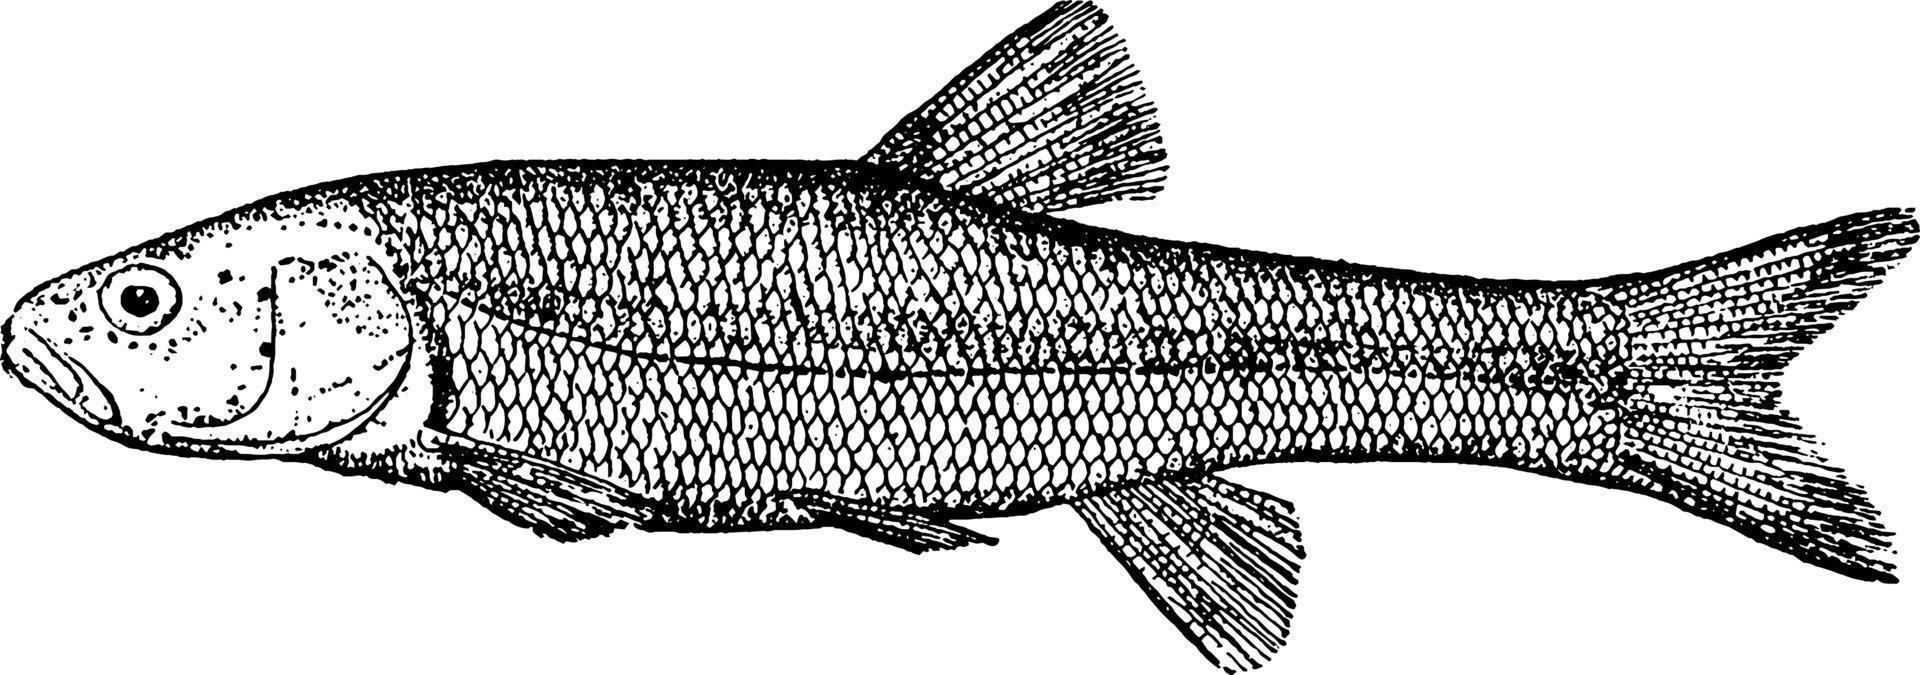 Chub or Squalius cephalus, vintage illustration vector